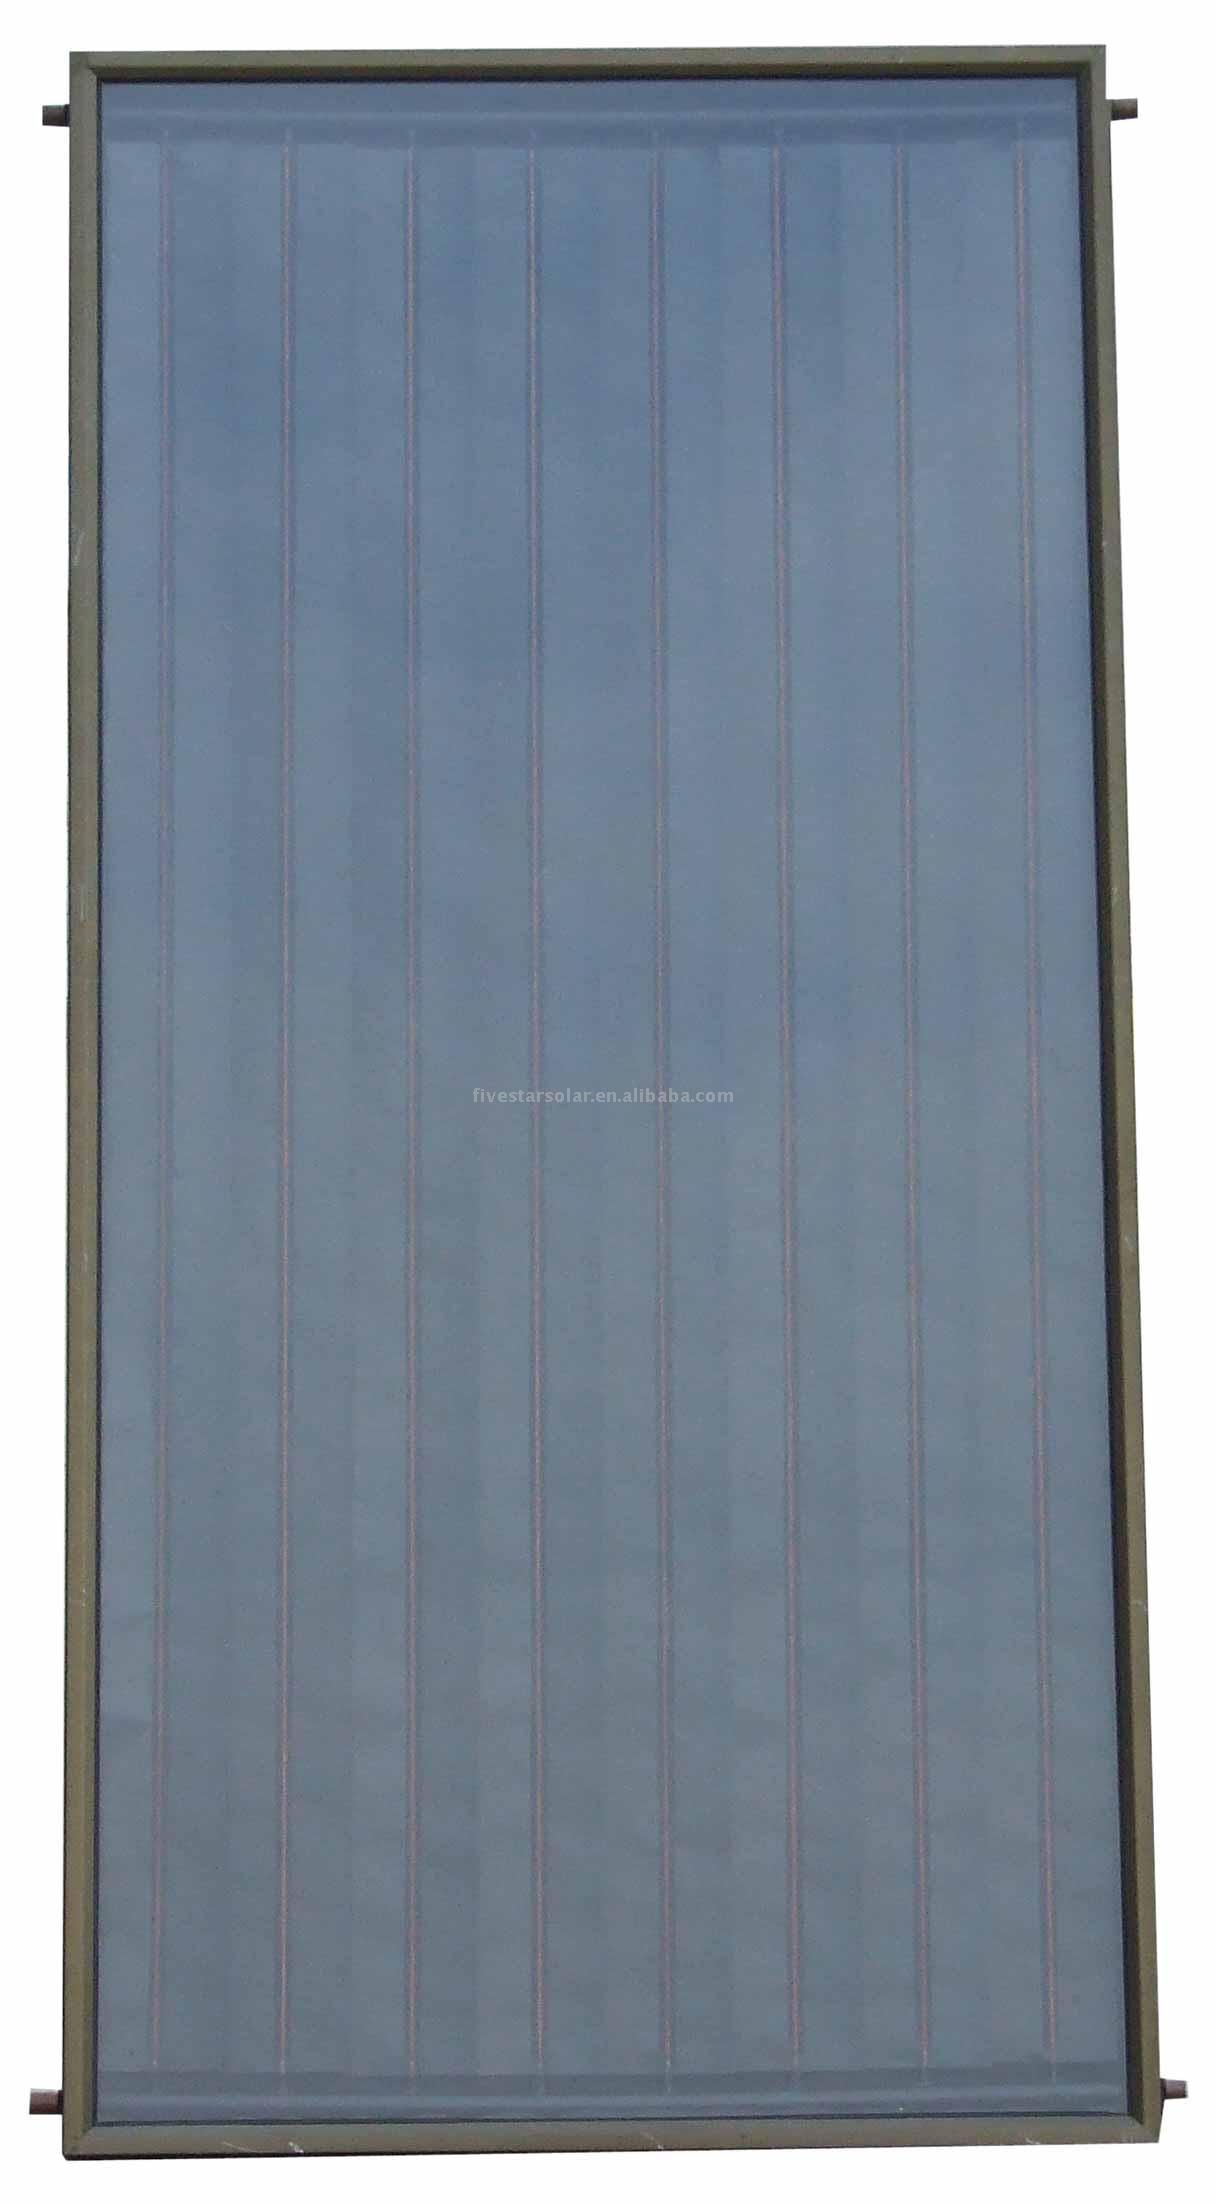  FP2.0 Flat Plate Solar Collector (FP2.0 Пластине Солнечный коллектор)